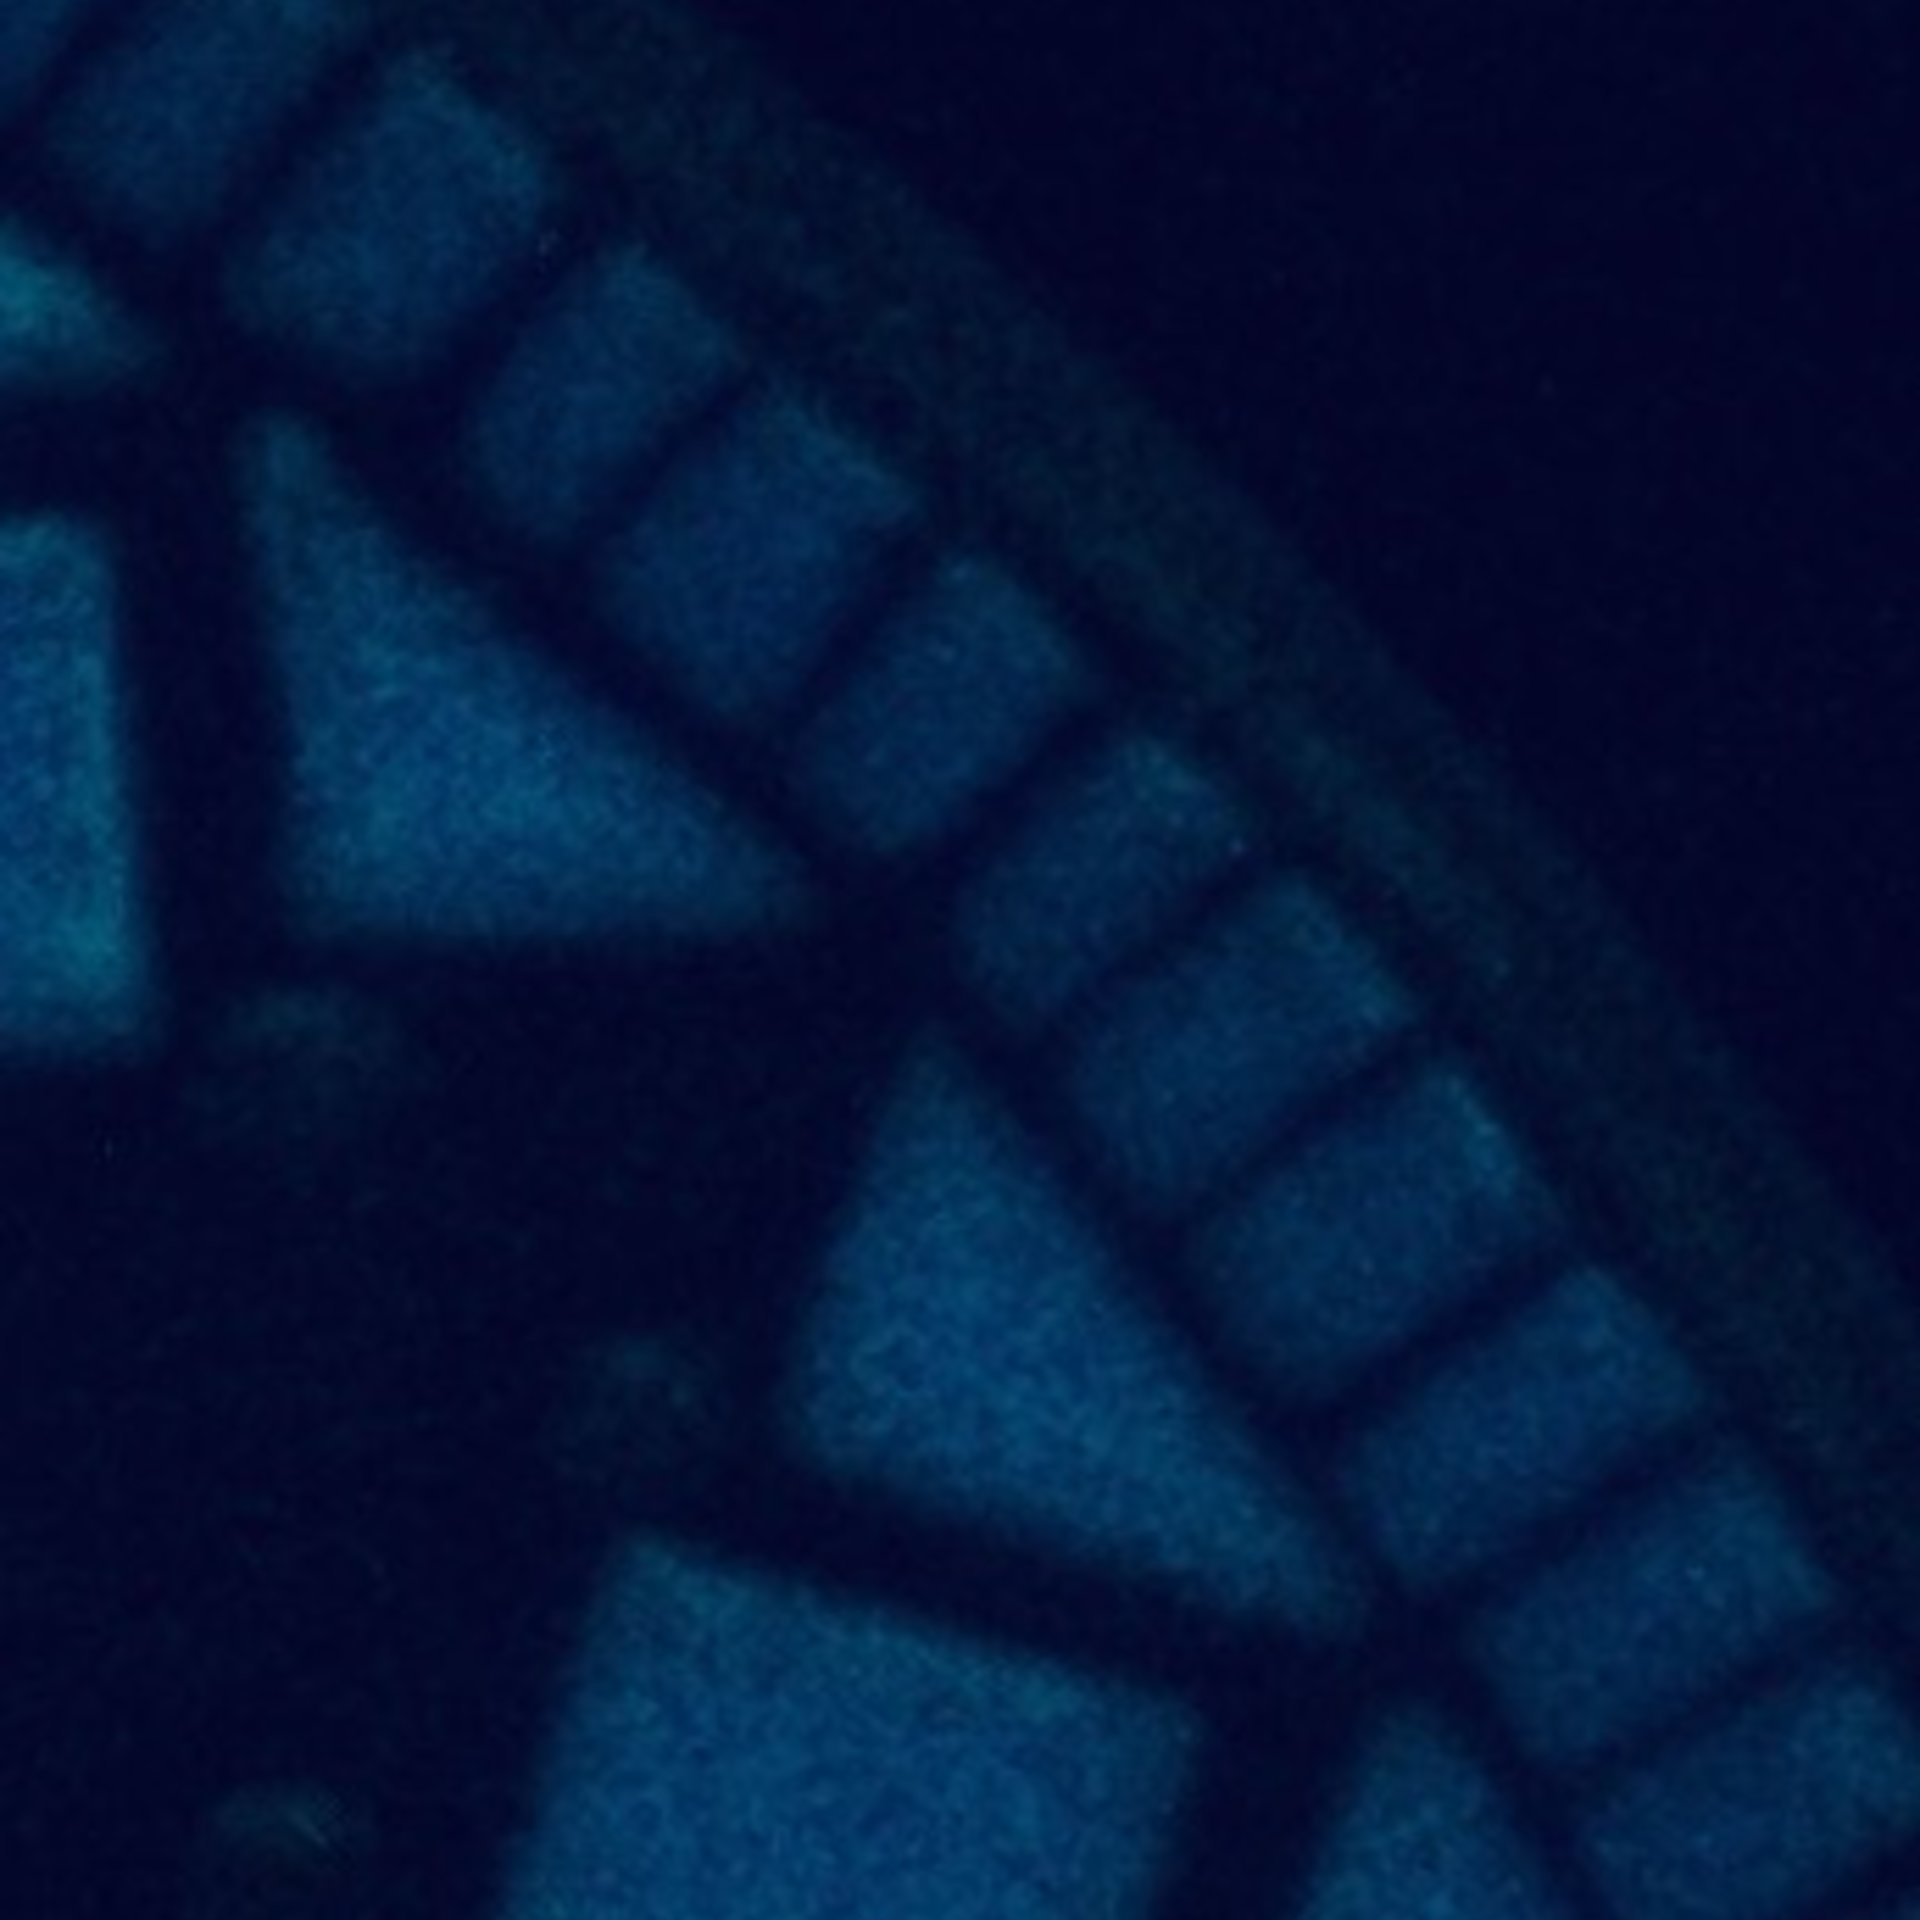 Wall Hanging Heart, Blue #2 ( Glow in the Dark) Heart-Mosaic / Porch Decor, Wall Decor